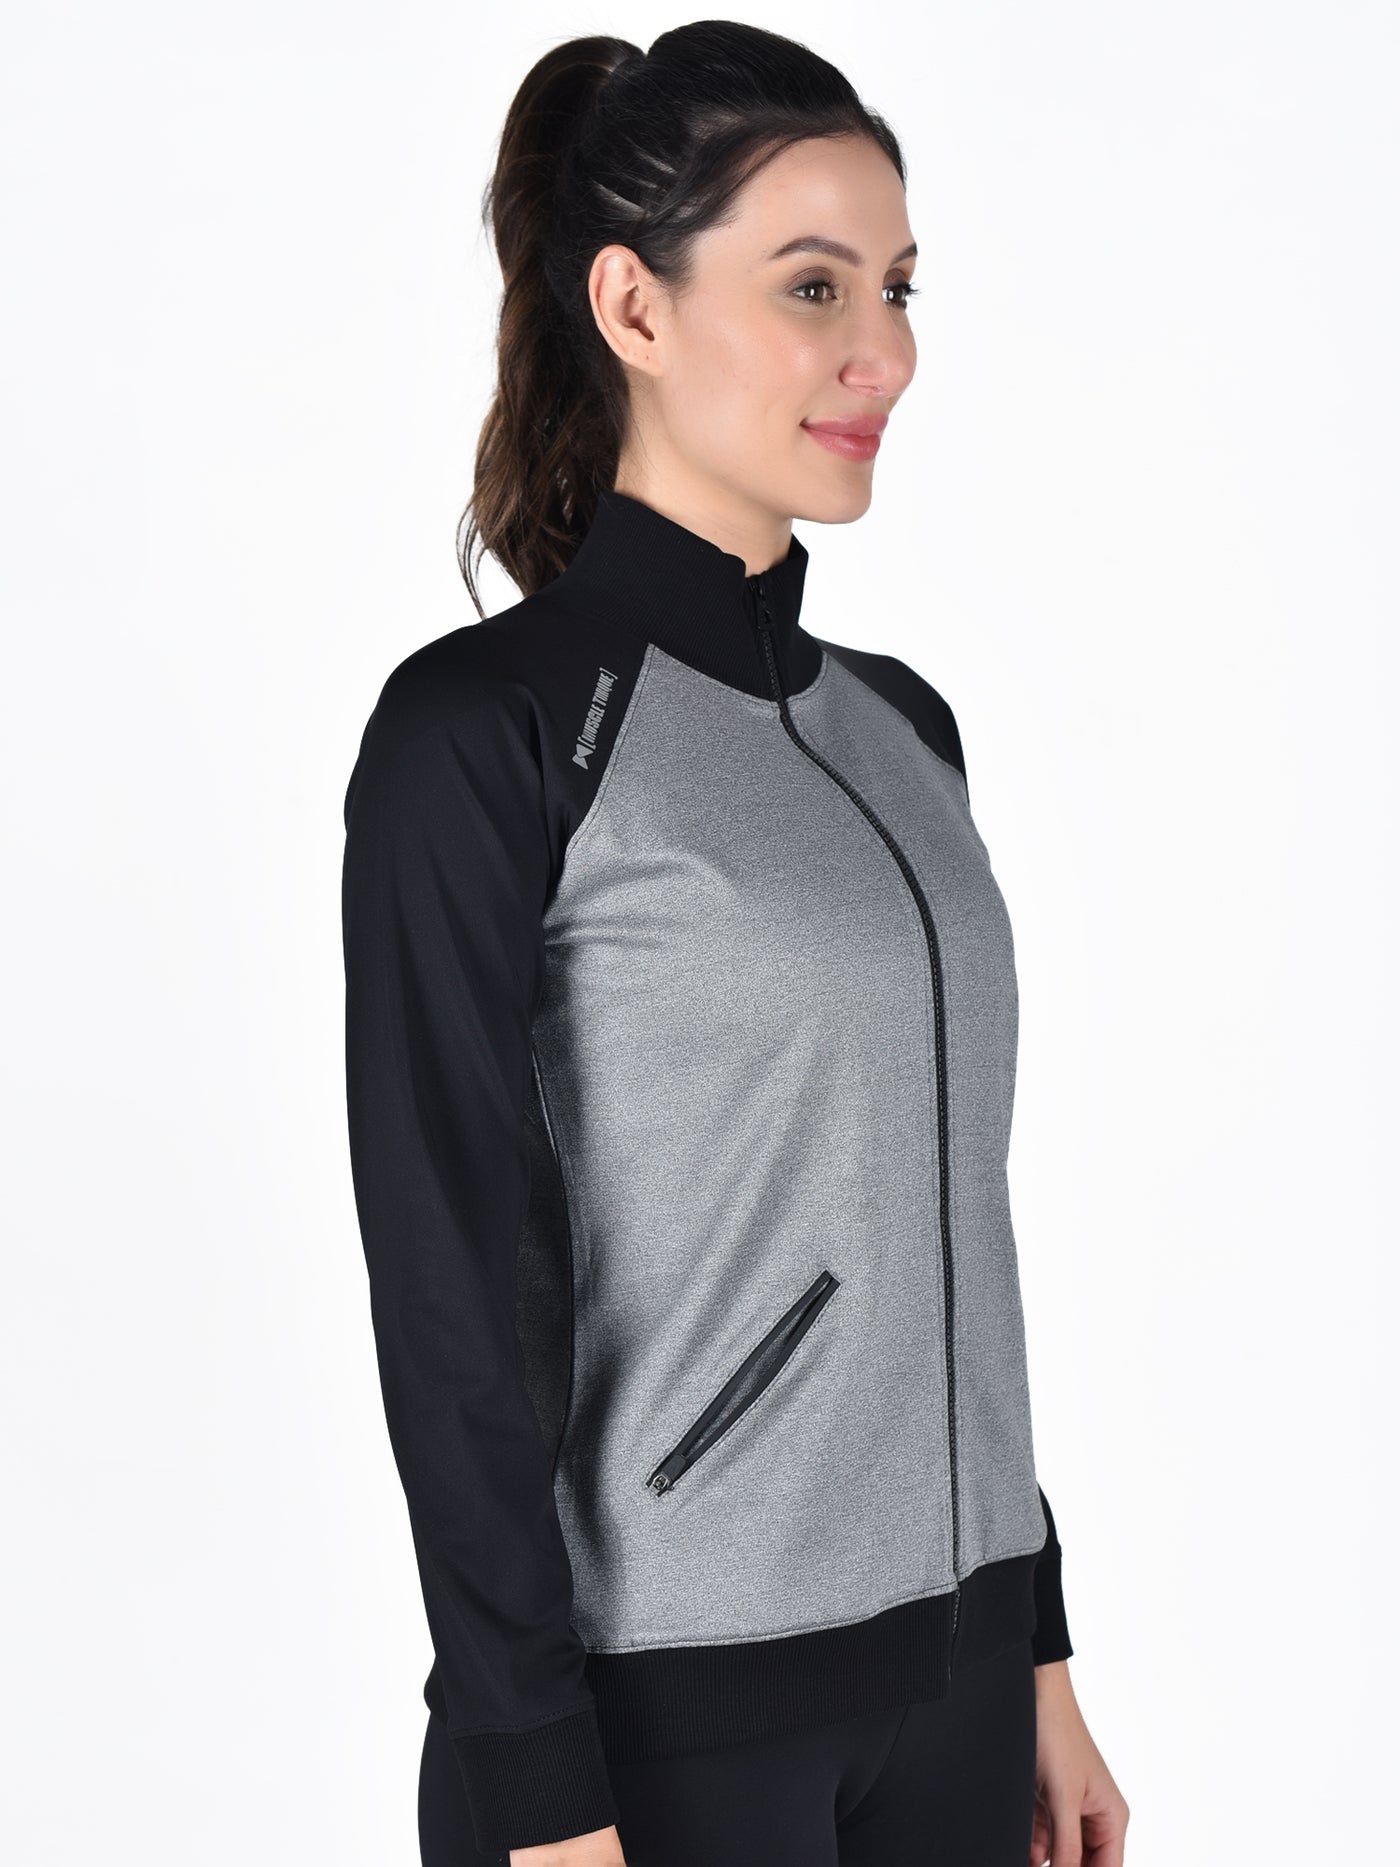 Bone Dry Zipper Pocket Sweatshirt – Grey & Black